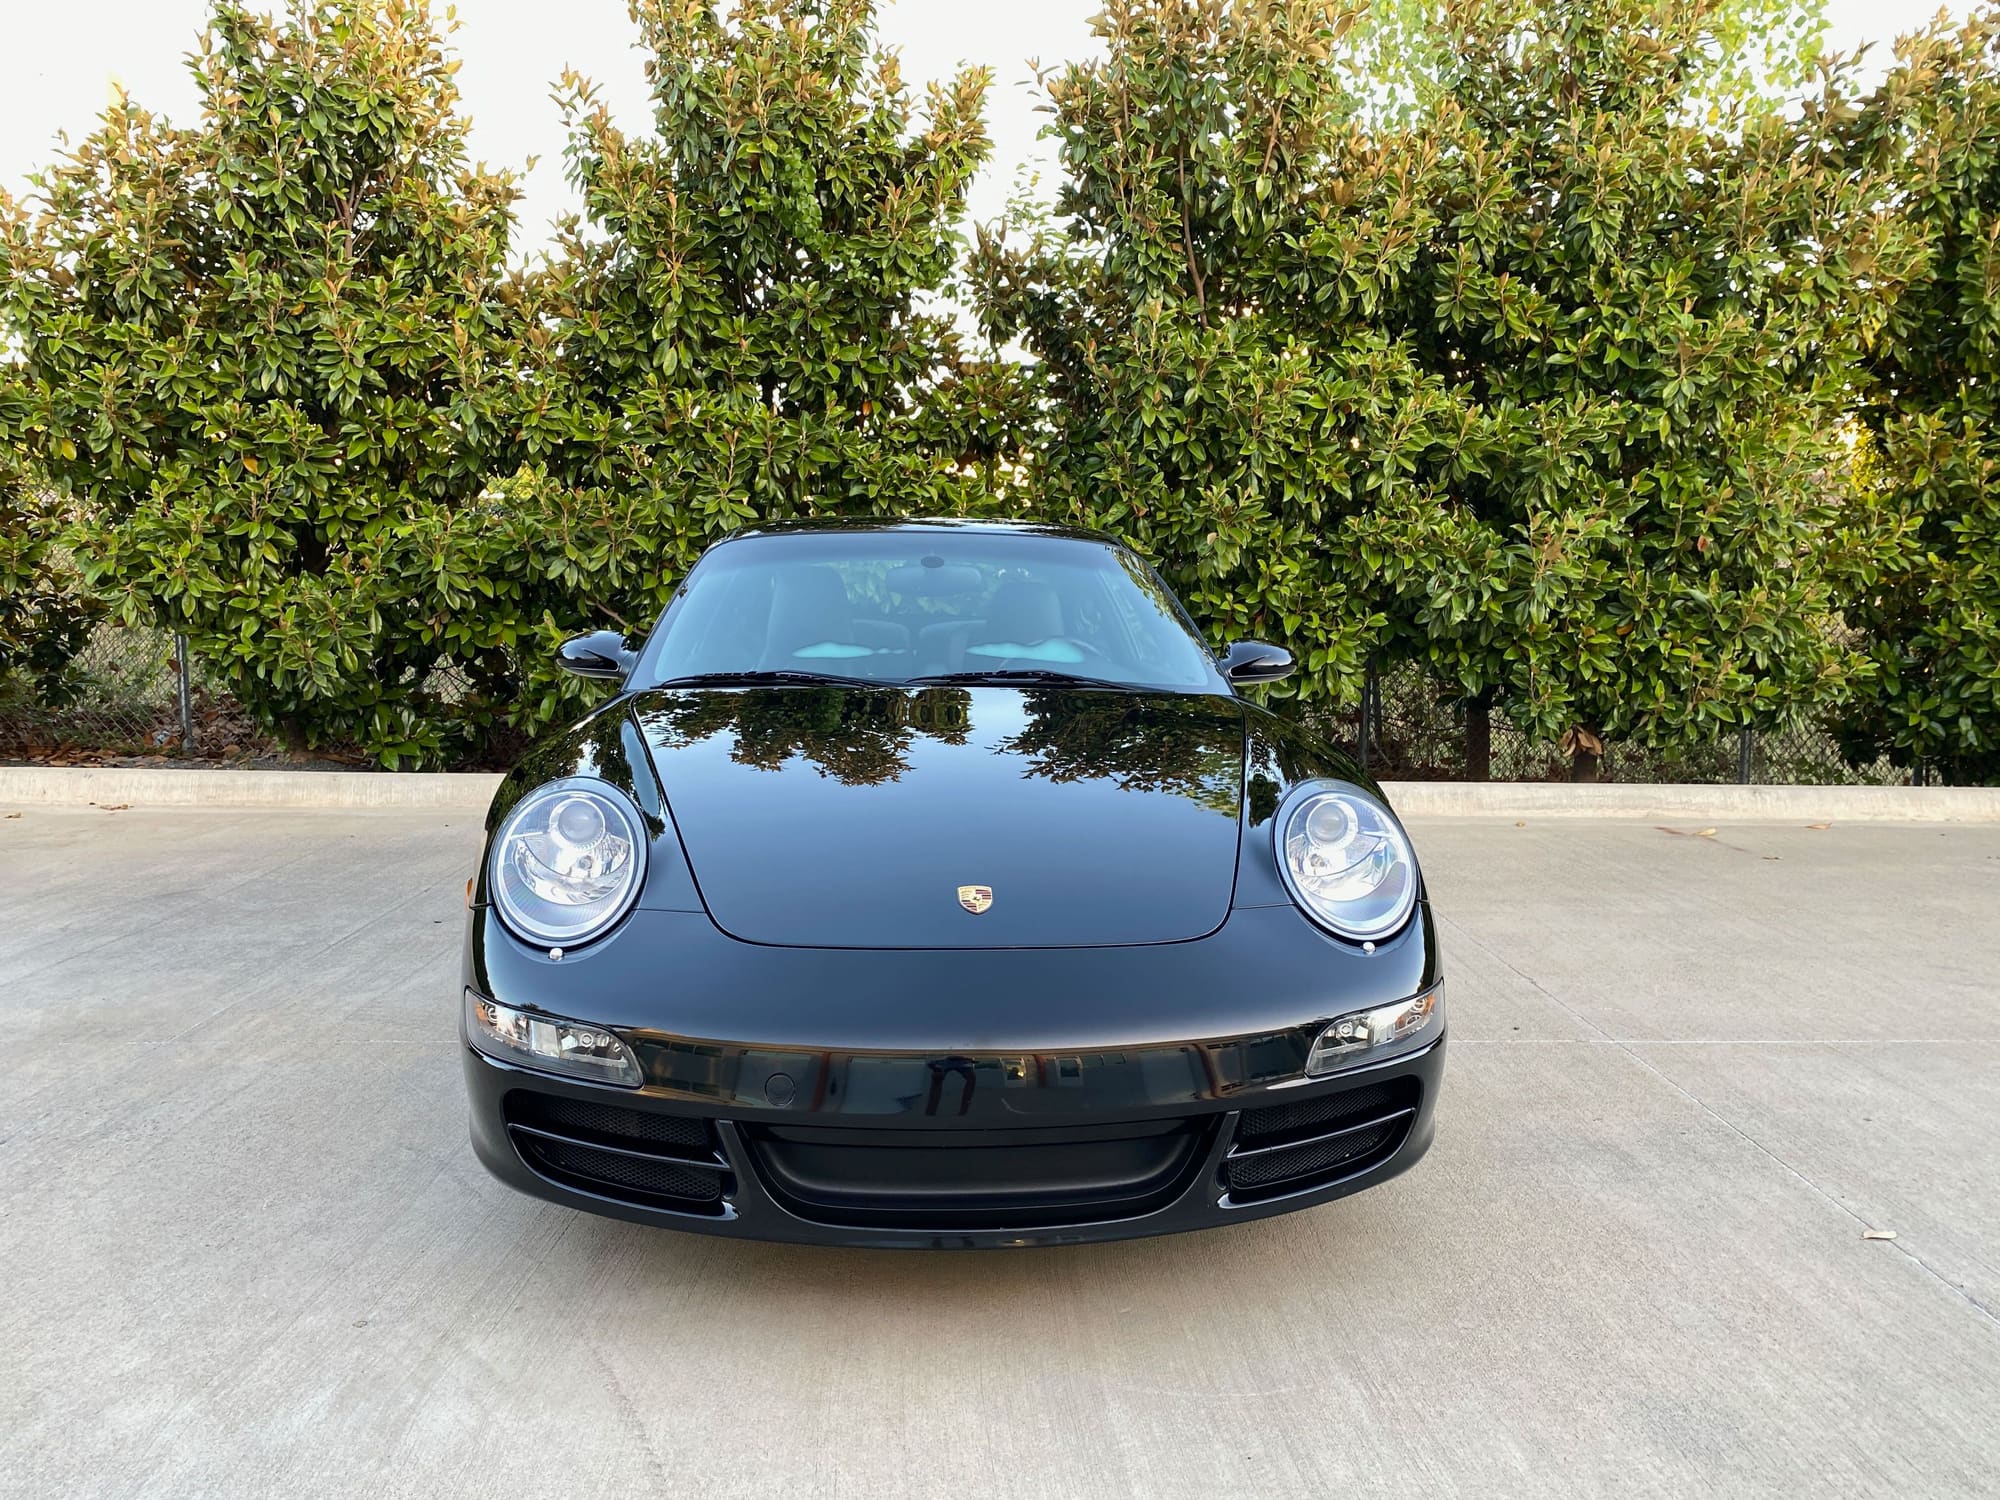 2001 Porsche 911 - 2007 Porsche 911 C2S Coupe (997S) 6 Speed.  Black/Black 53k miles - Used - Dallas, TX 75231, United States